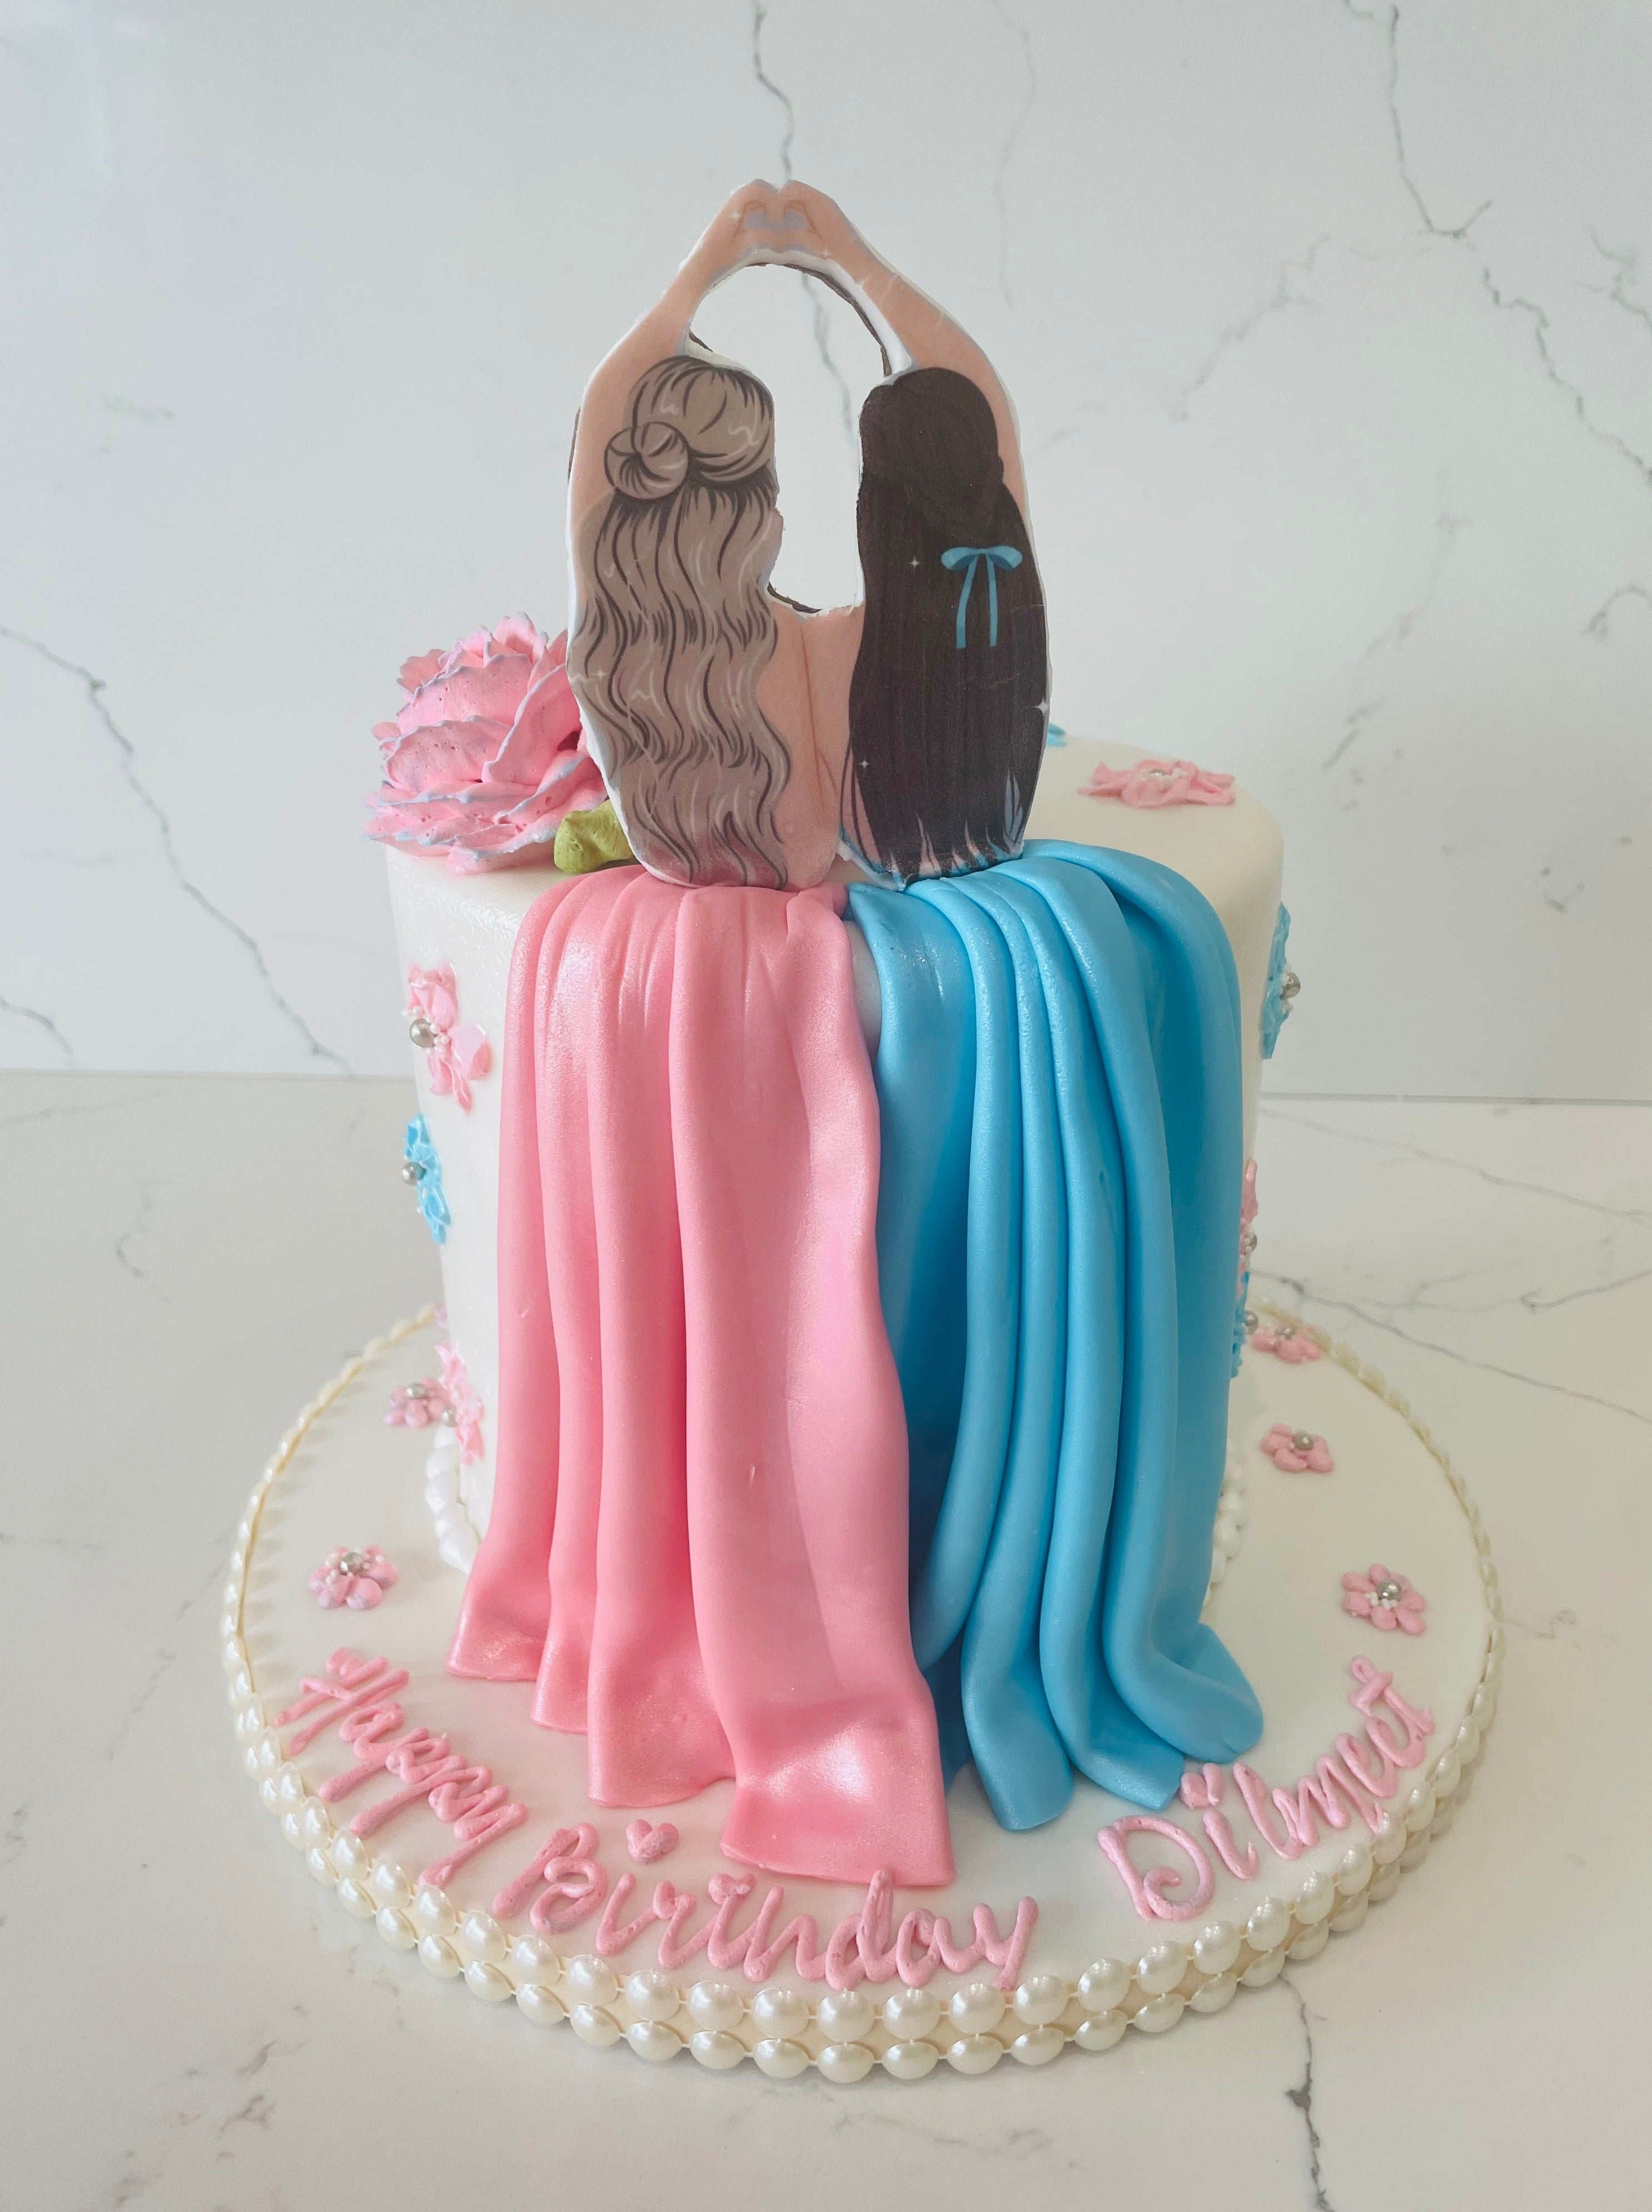 Forever Friends Cake - Amazing Cake Ideas